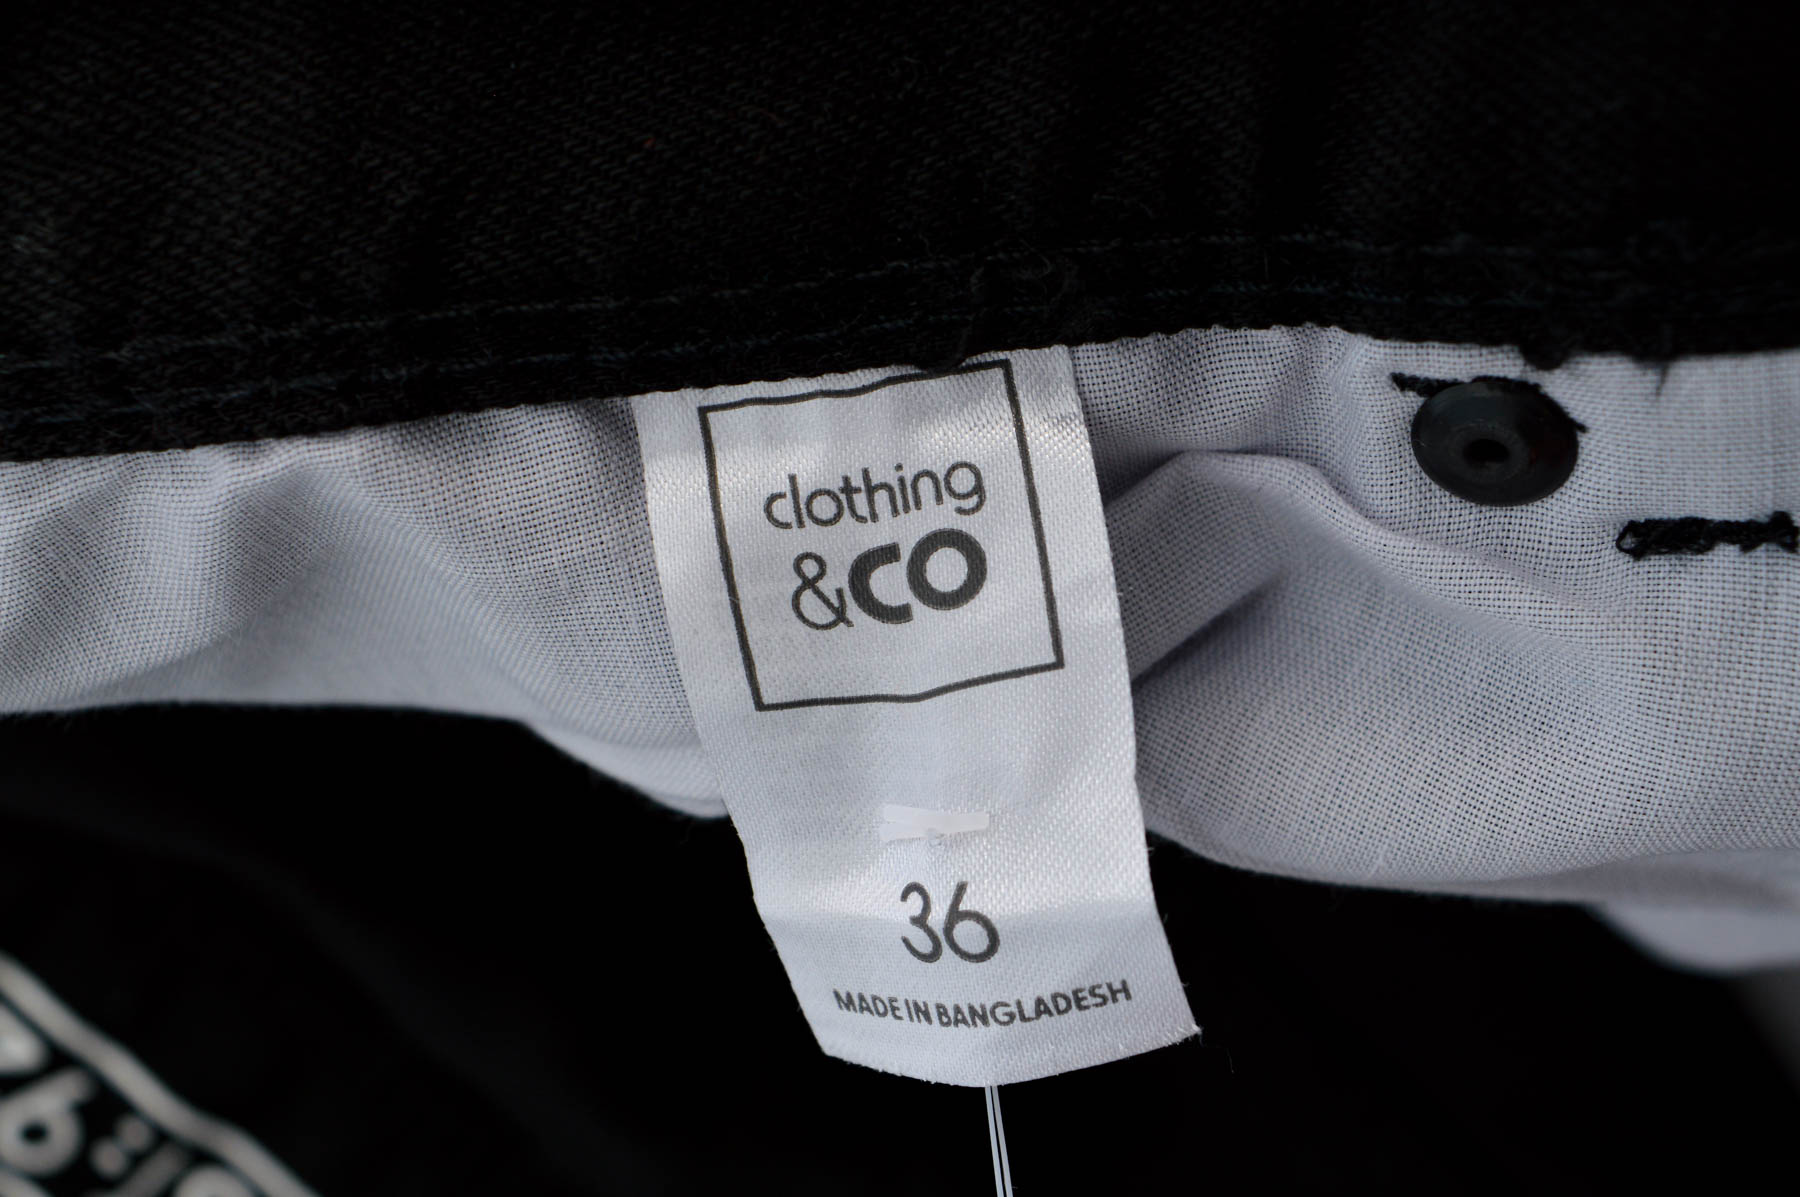 Men's jeans - Clothing & CO - 2